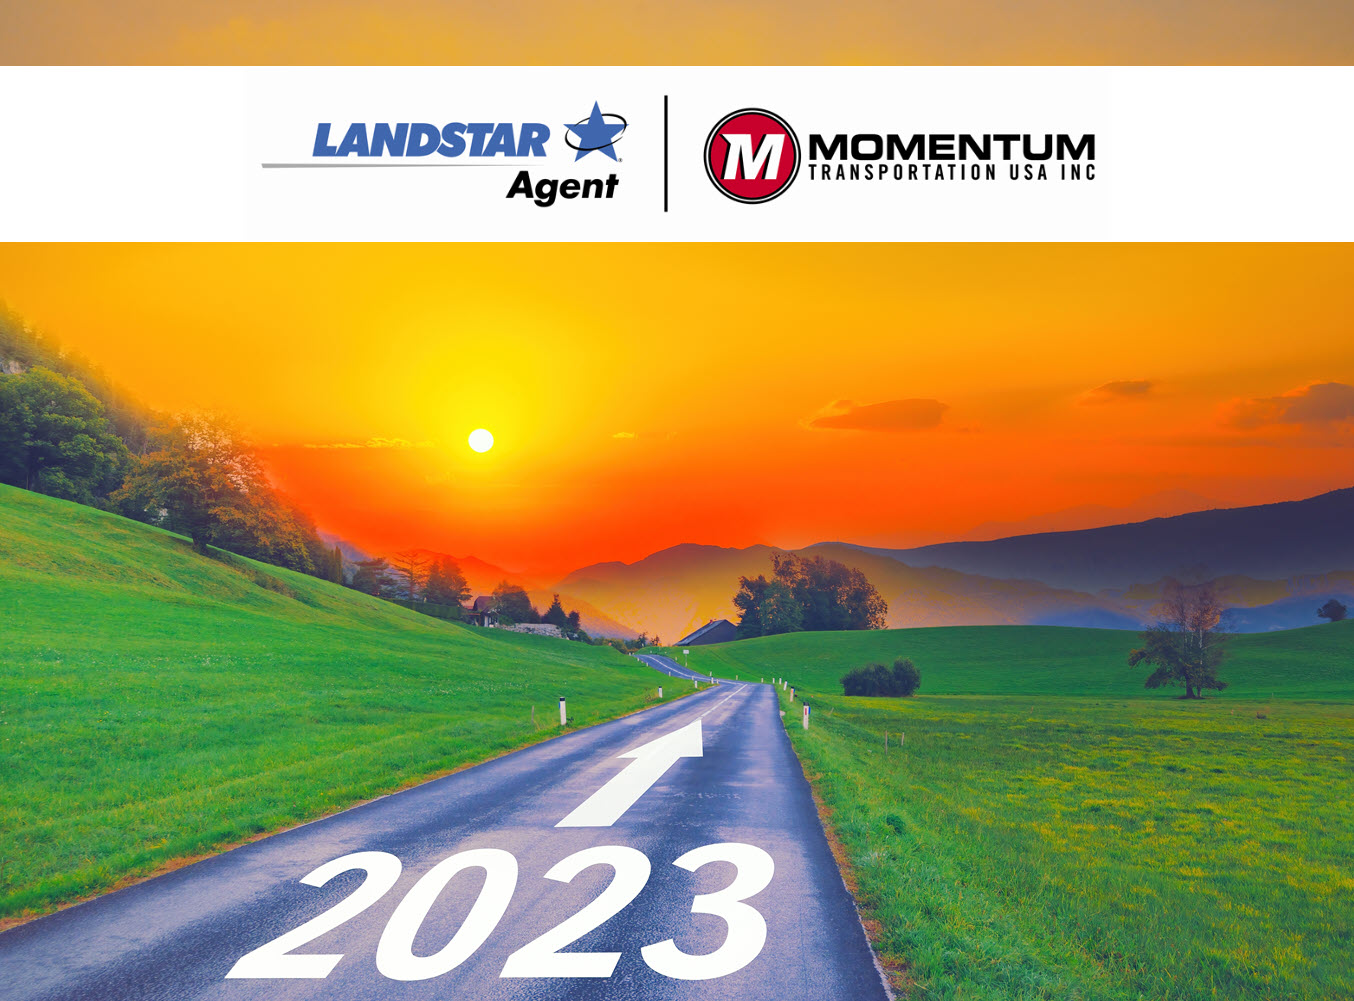 2023 Predictions from Momentum Transportation